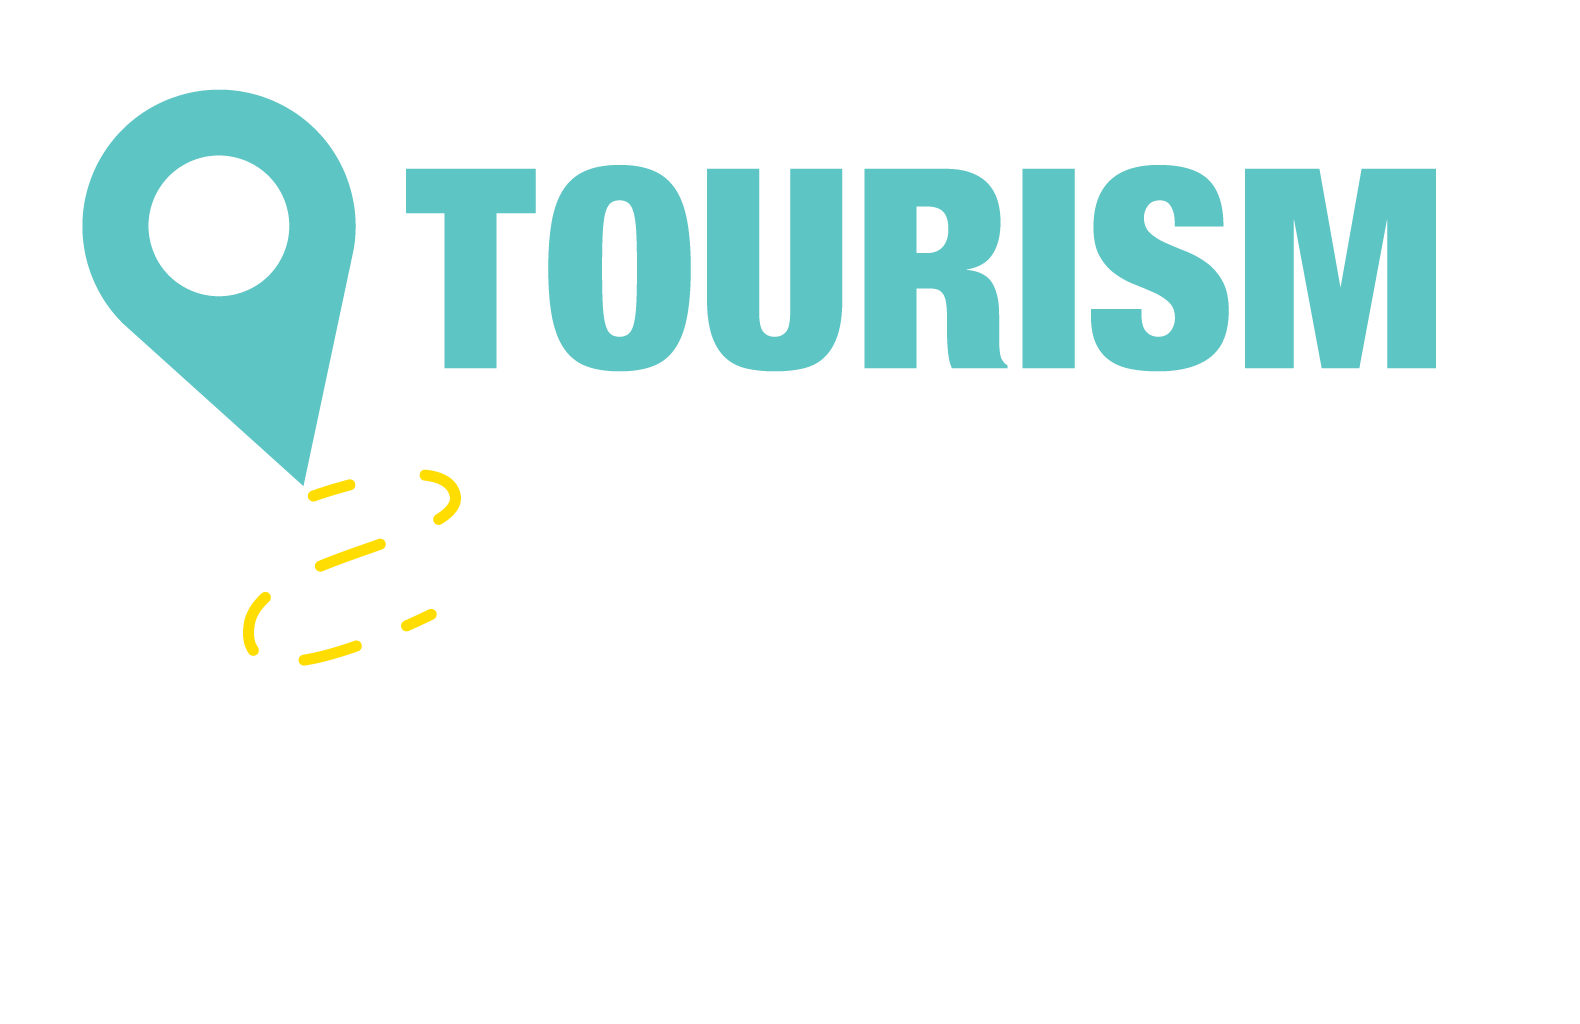 Tourism Opportunity Navigator LOGO